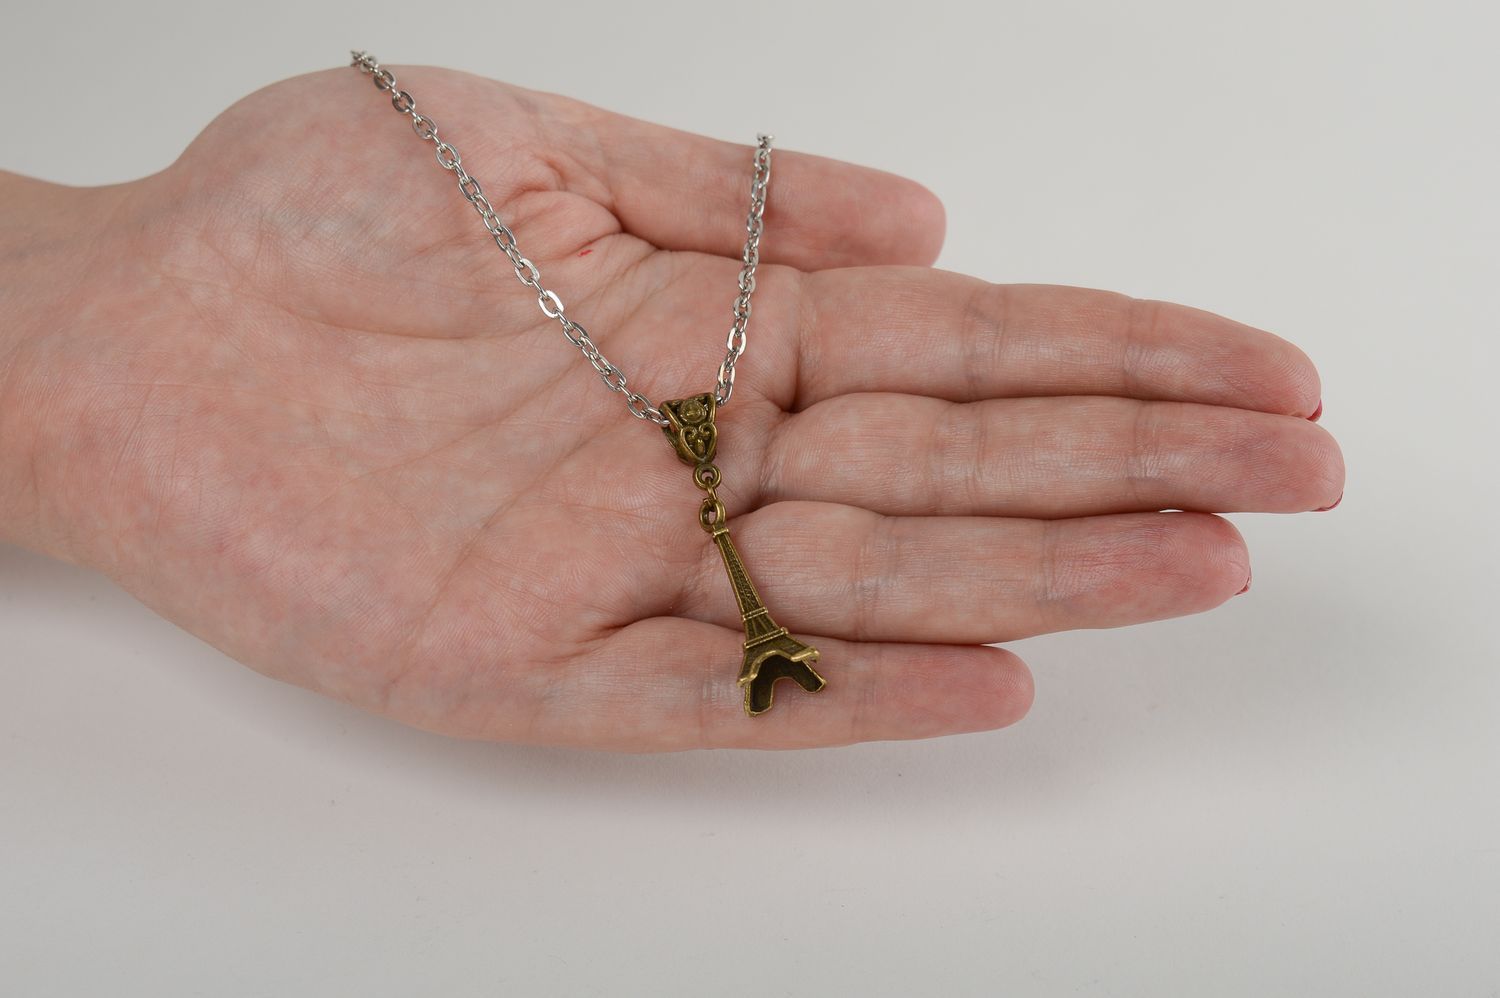 Handmade vintage pendant of chain metal pendant elegant accessories for women photo 5